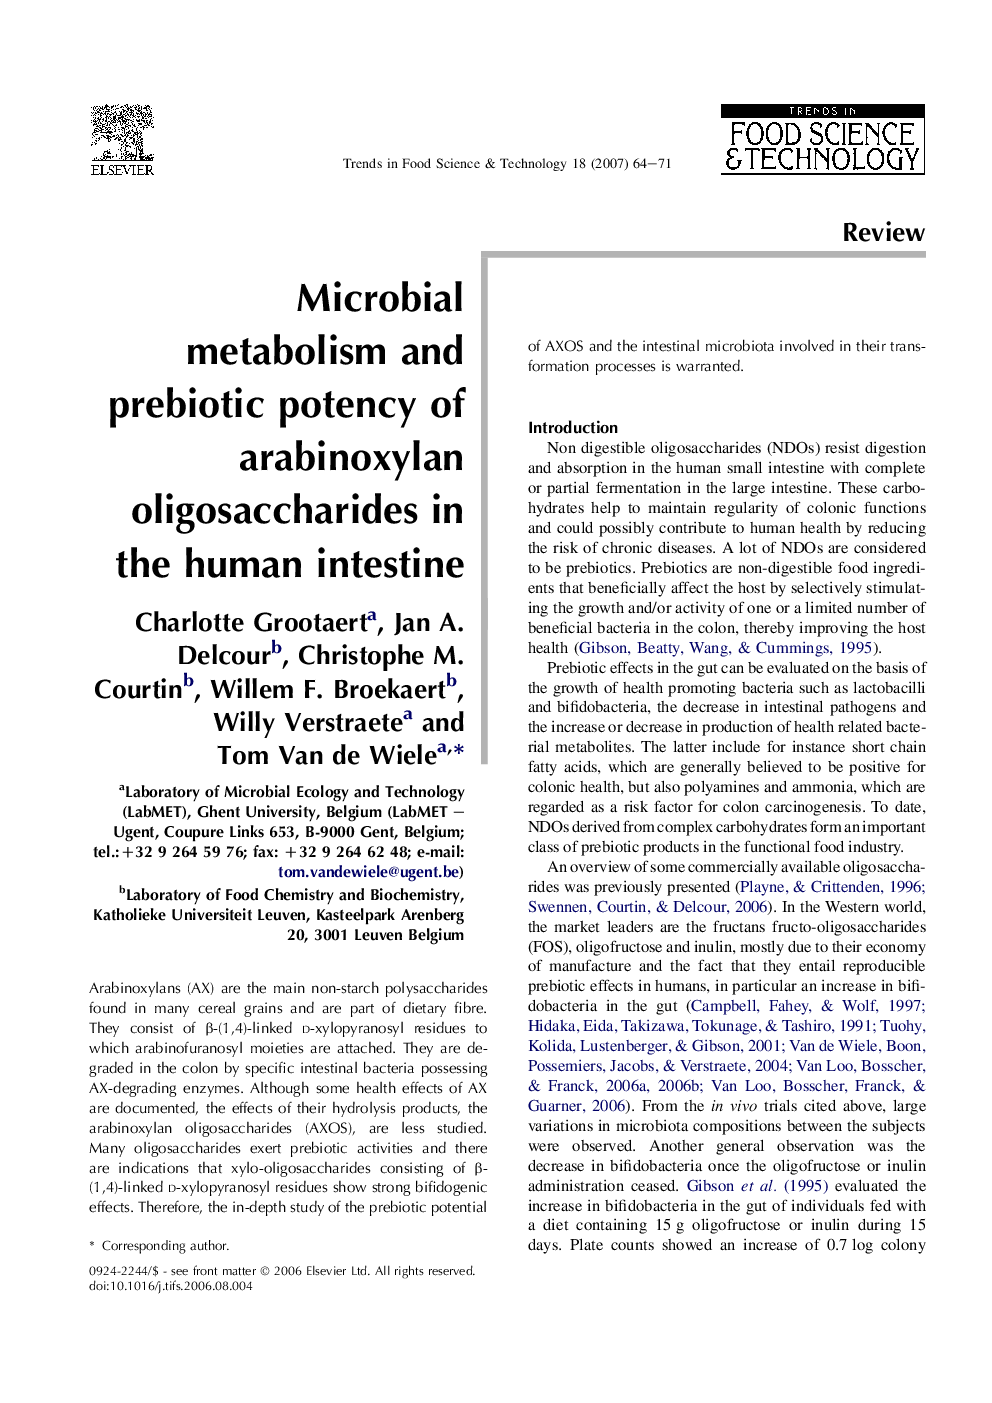 Microbial metabolism and prebiotic potency of arabinoxylan oligosaccharides in the human intestine